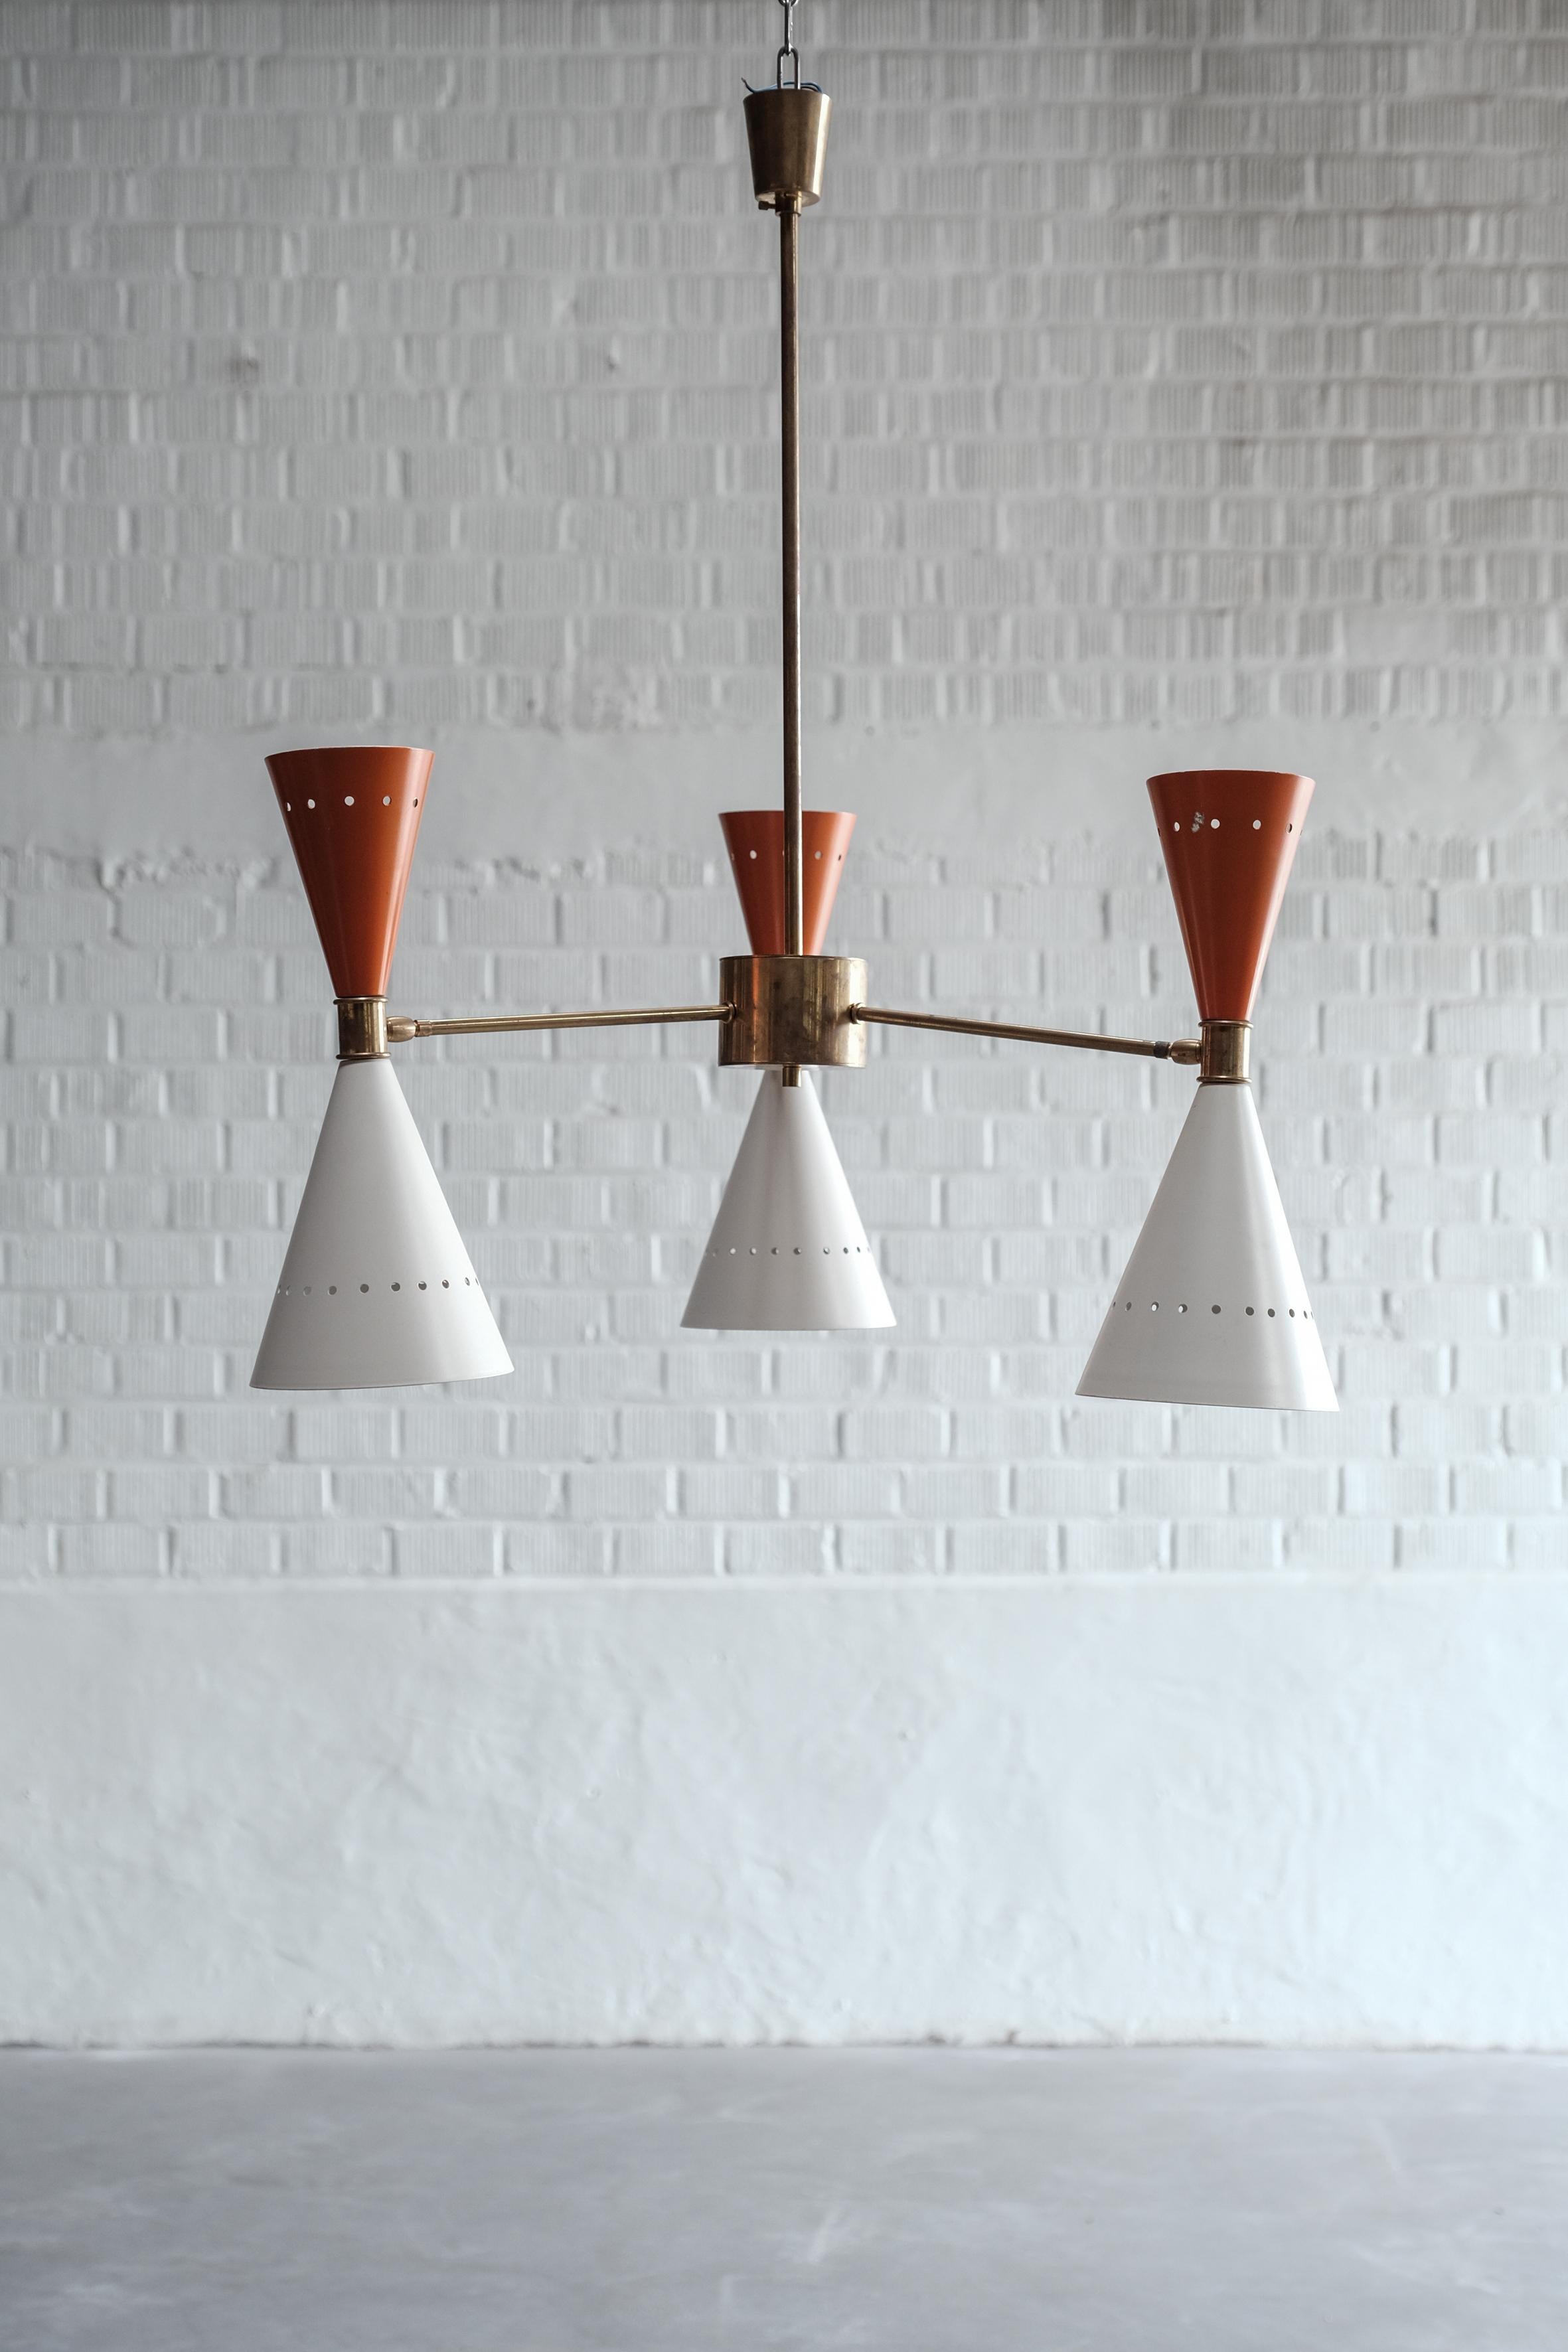 Italian Pendant lamp made of brass and metal cones in white and orange. 

Functional! 

H 88 70 diameter 

cones 39 cm
